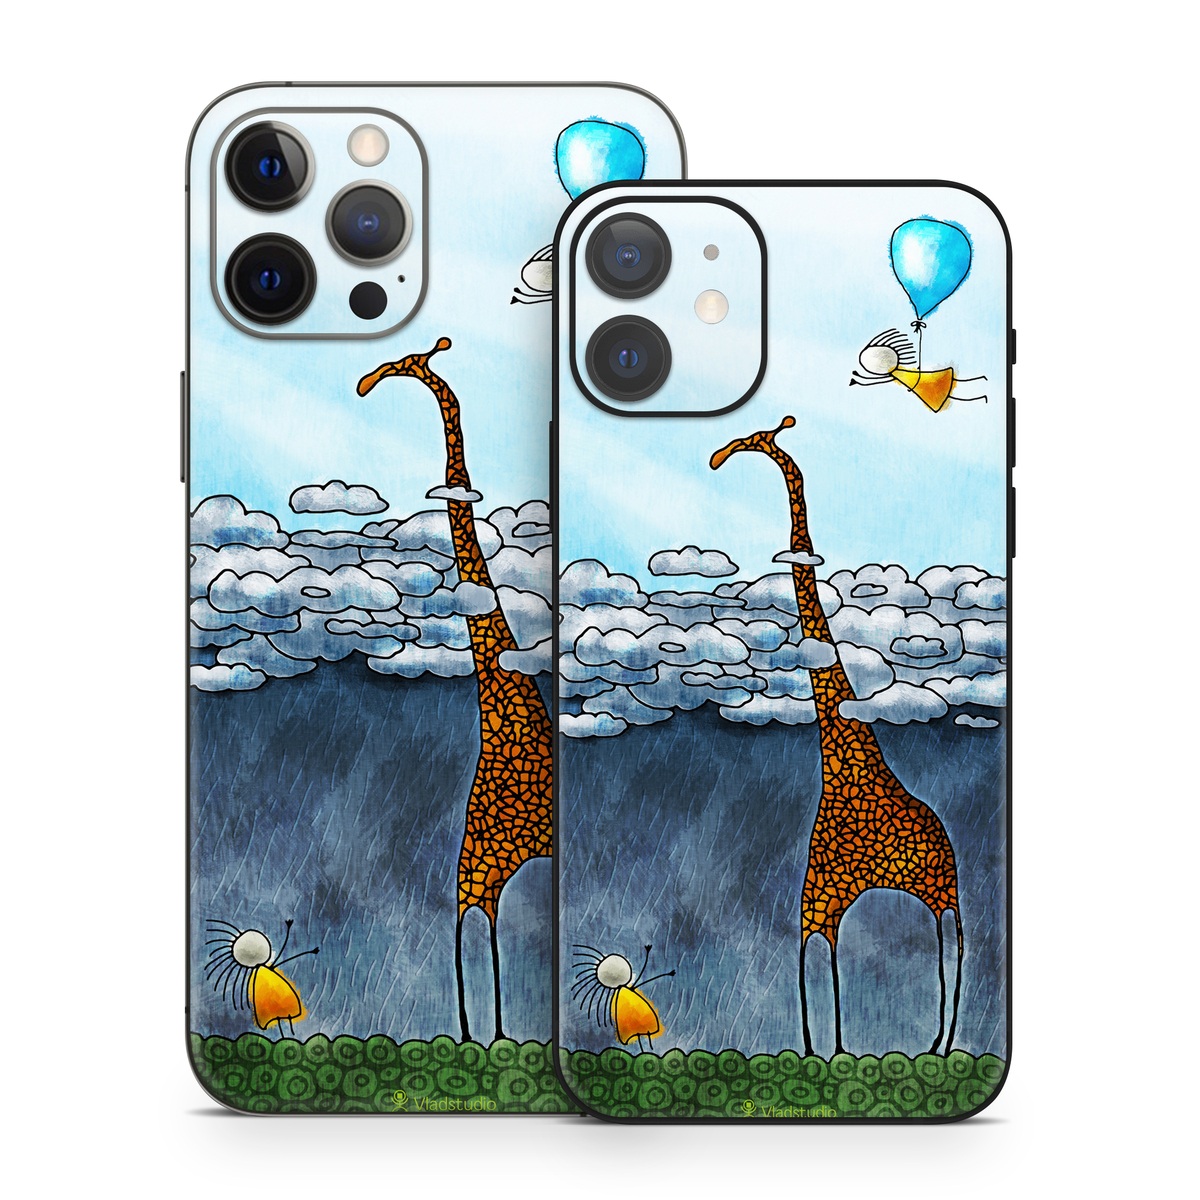 iPhone 12 Series Skin design of Giraffe, Sky, Tree, Water, Branch, Giraffidae, Illustration, Cloud, Grassland, Bird, with blue, gray, yellow, green colors